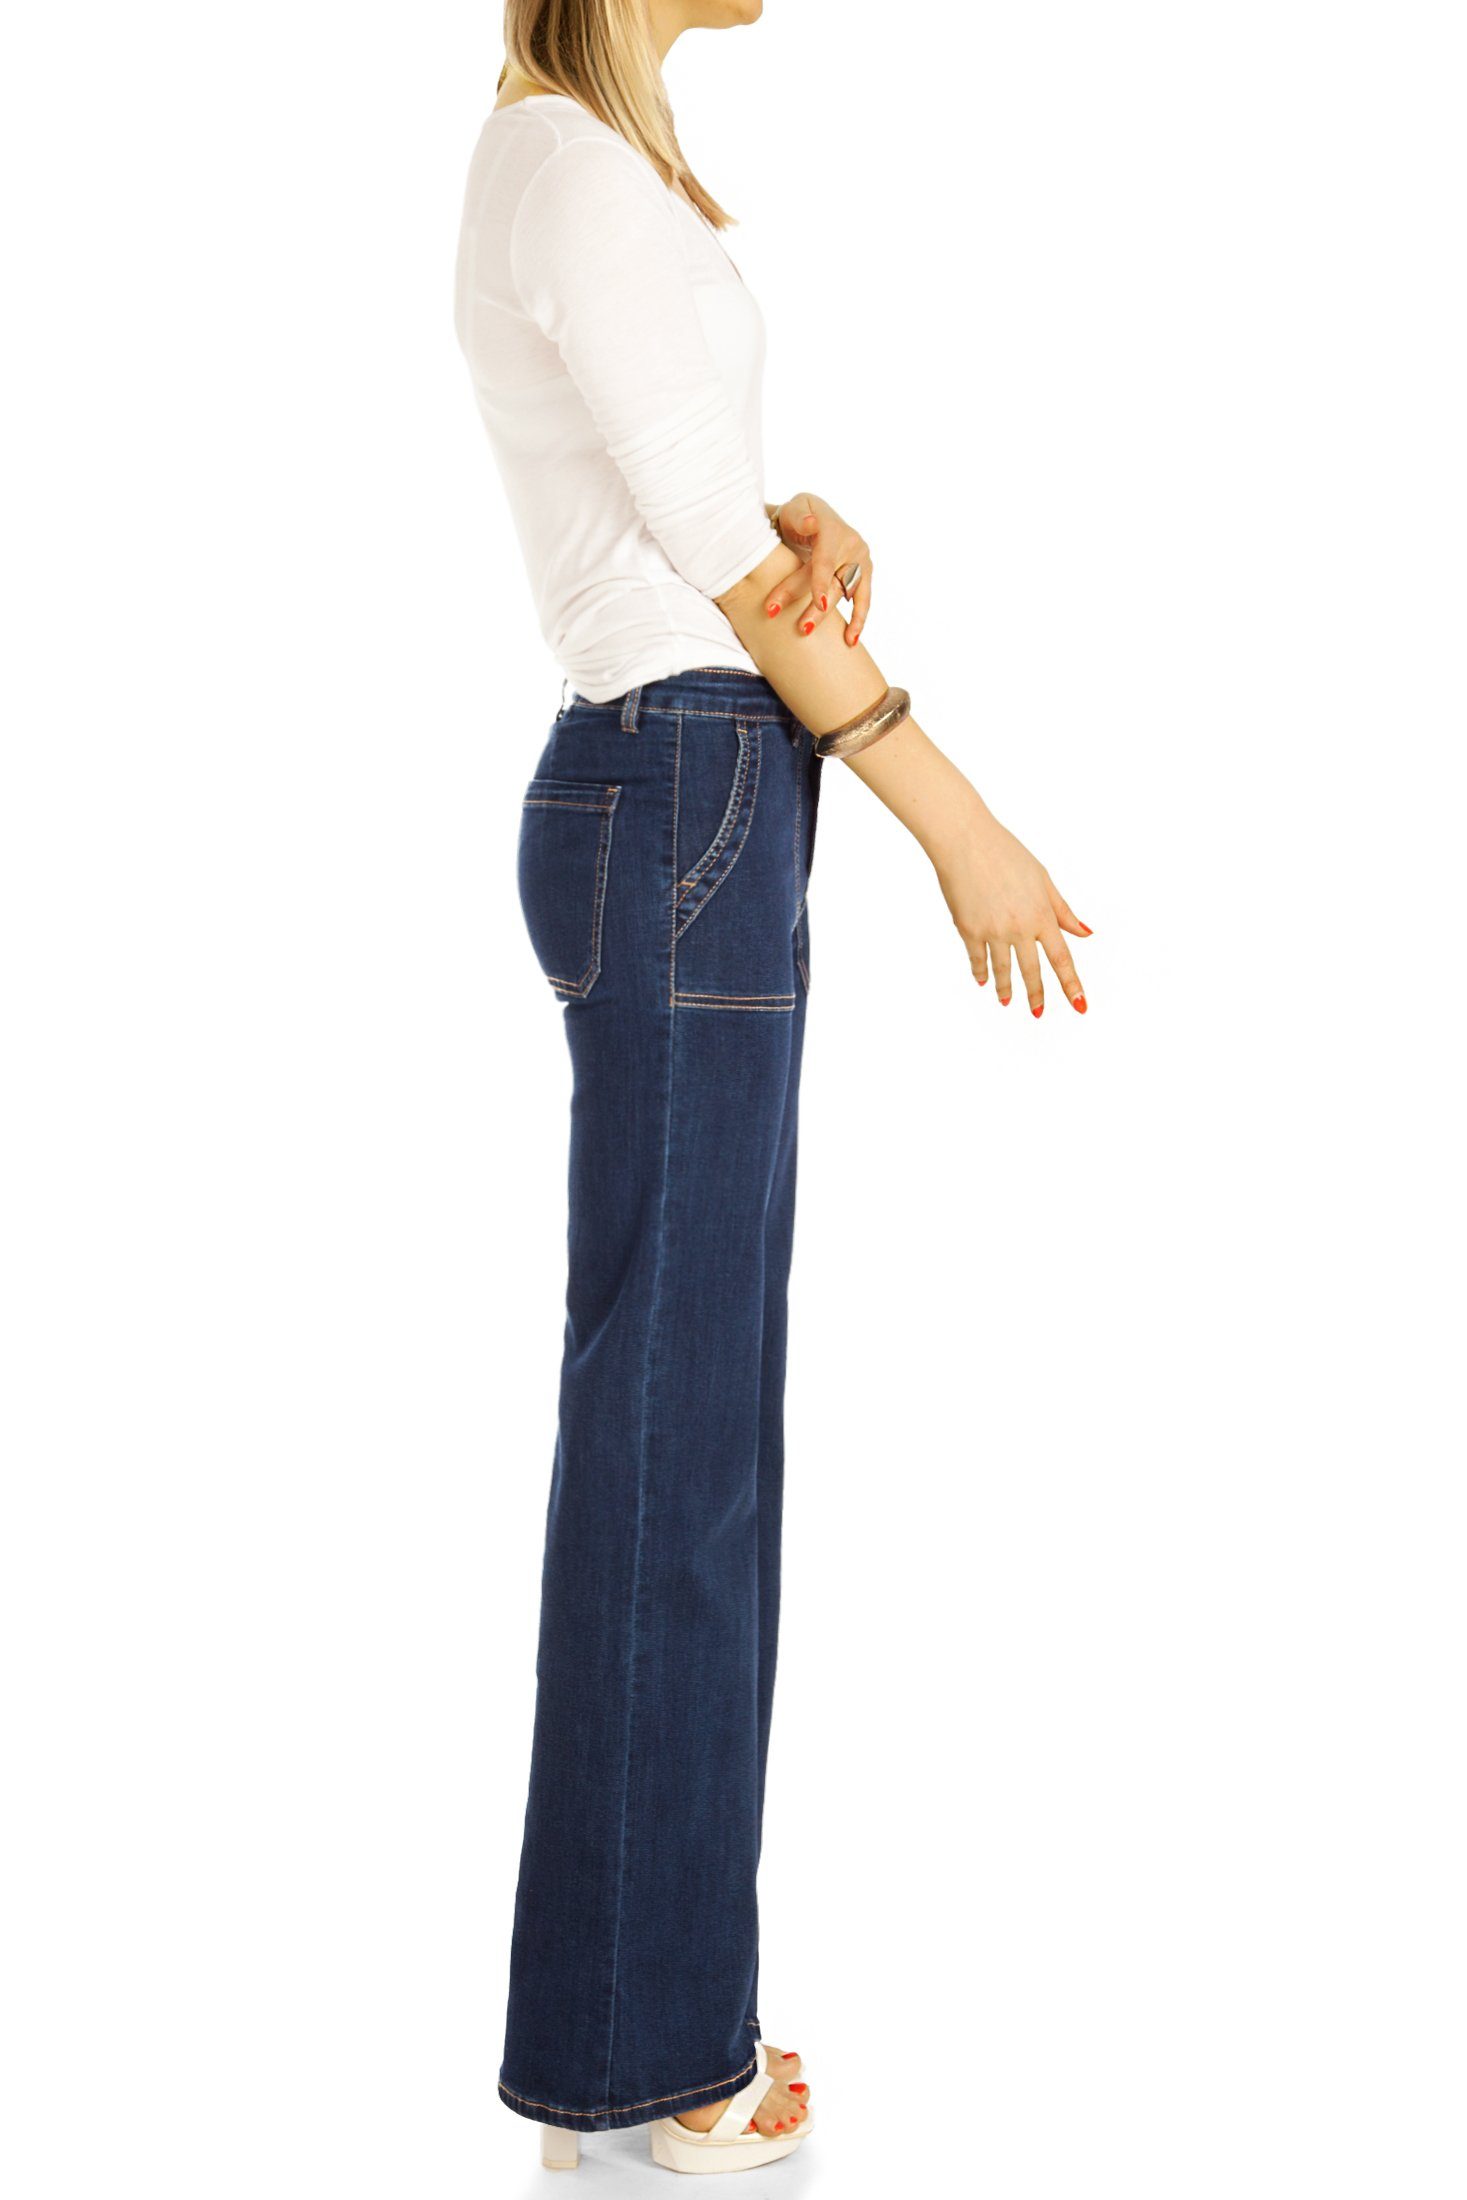 Hosen Stretch-Anteil, - styled mit Bootcut - waist Passform Damen j31k straight Jeans, 5-Pocket-Style medium dunkelblau be Bootcut-Jeans